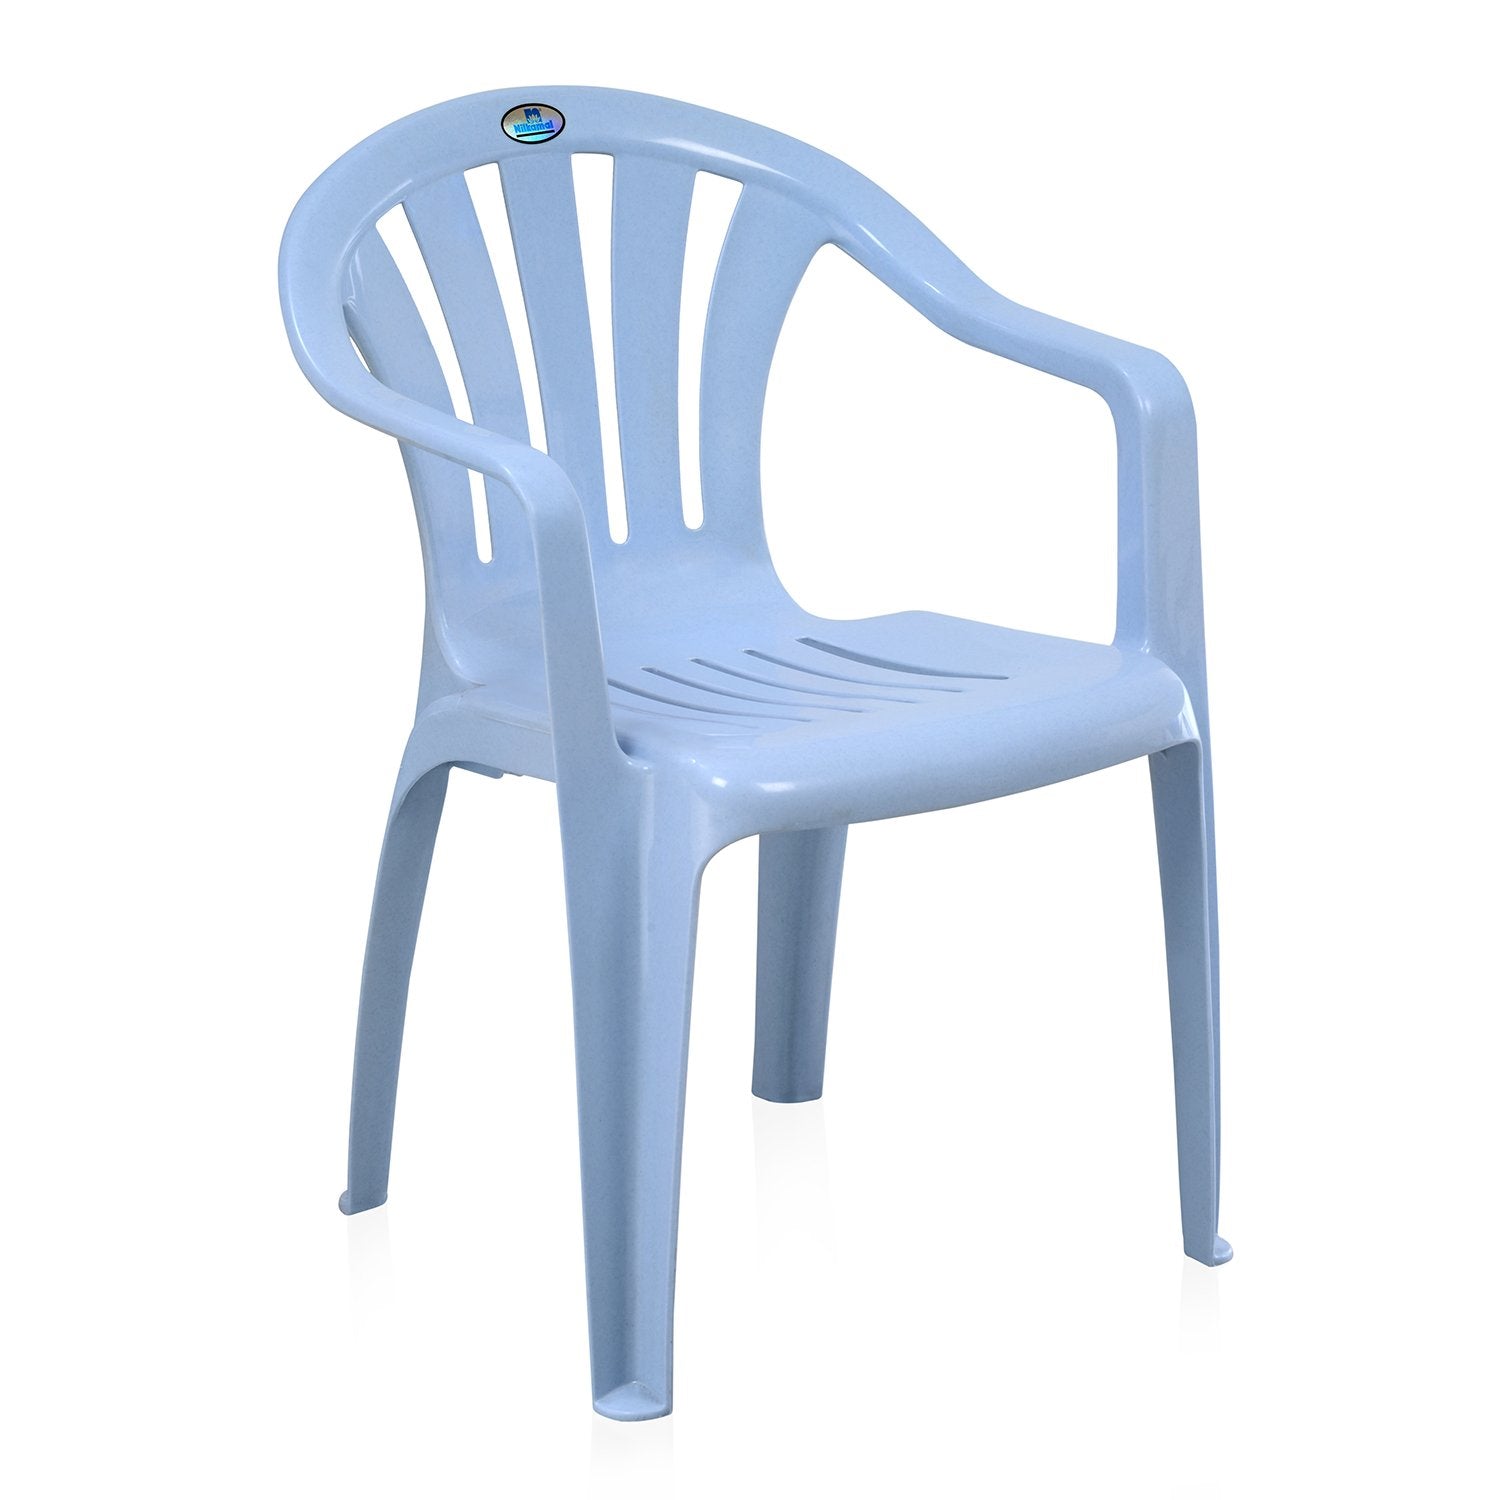 nilkamal chair for baby